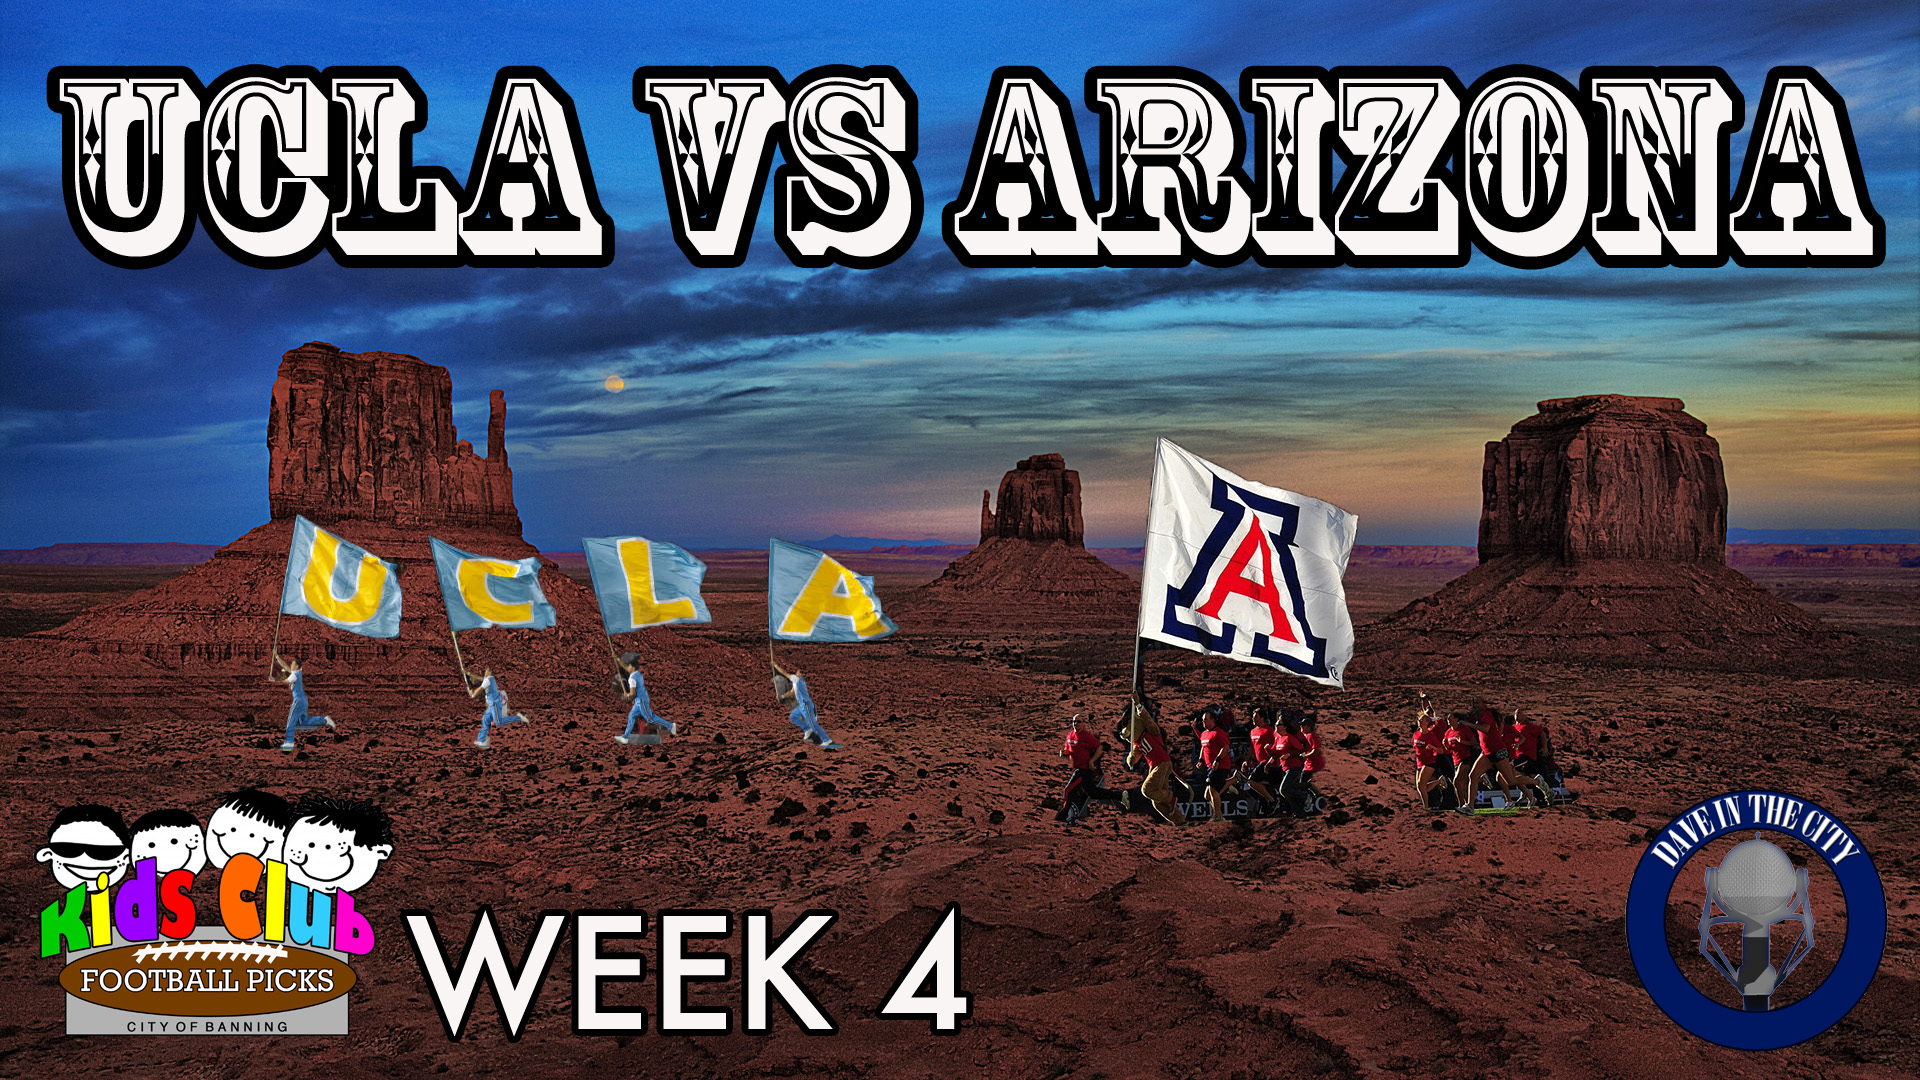 Podcast: UCLA vs Arizona Preview; Kids Club Wk 4 Picks; NFL (09-23-15)